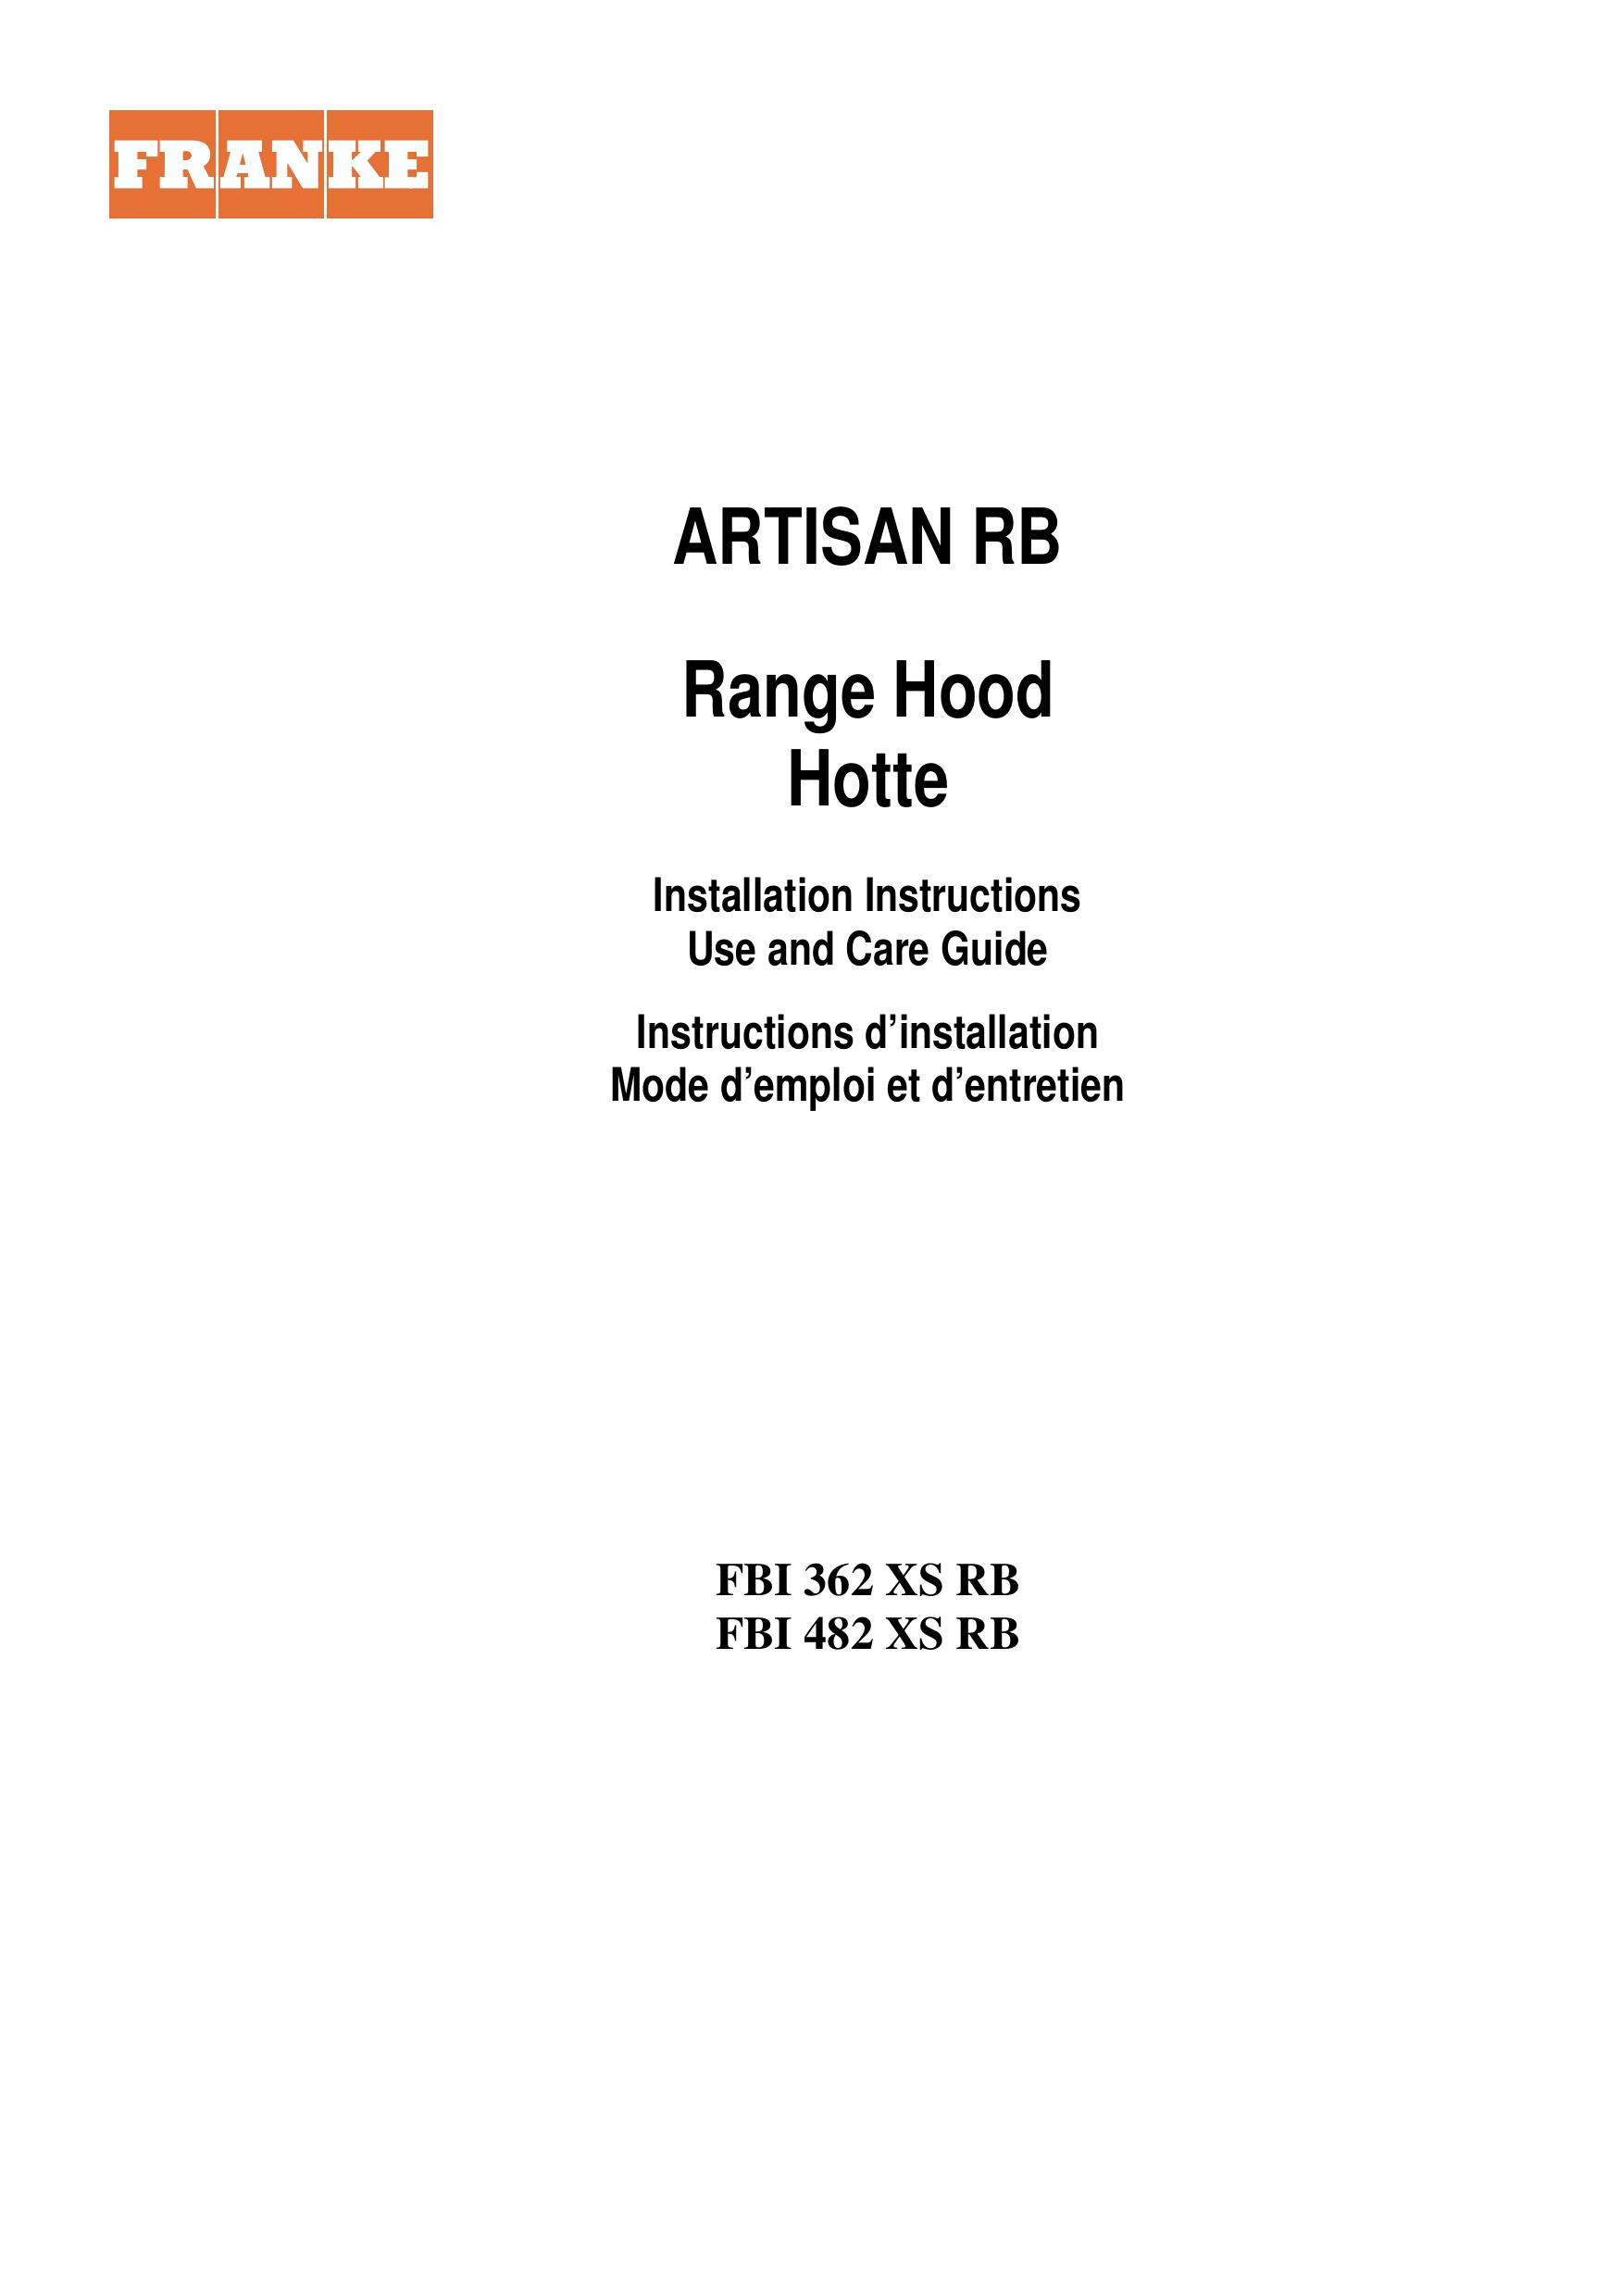 Franke Consumer Products FBI 362 XS RB Ventilation Hood User Manual